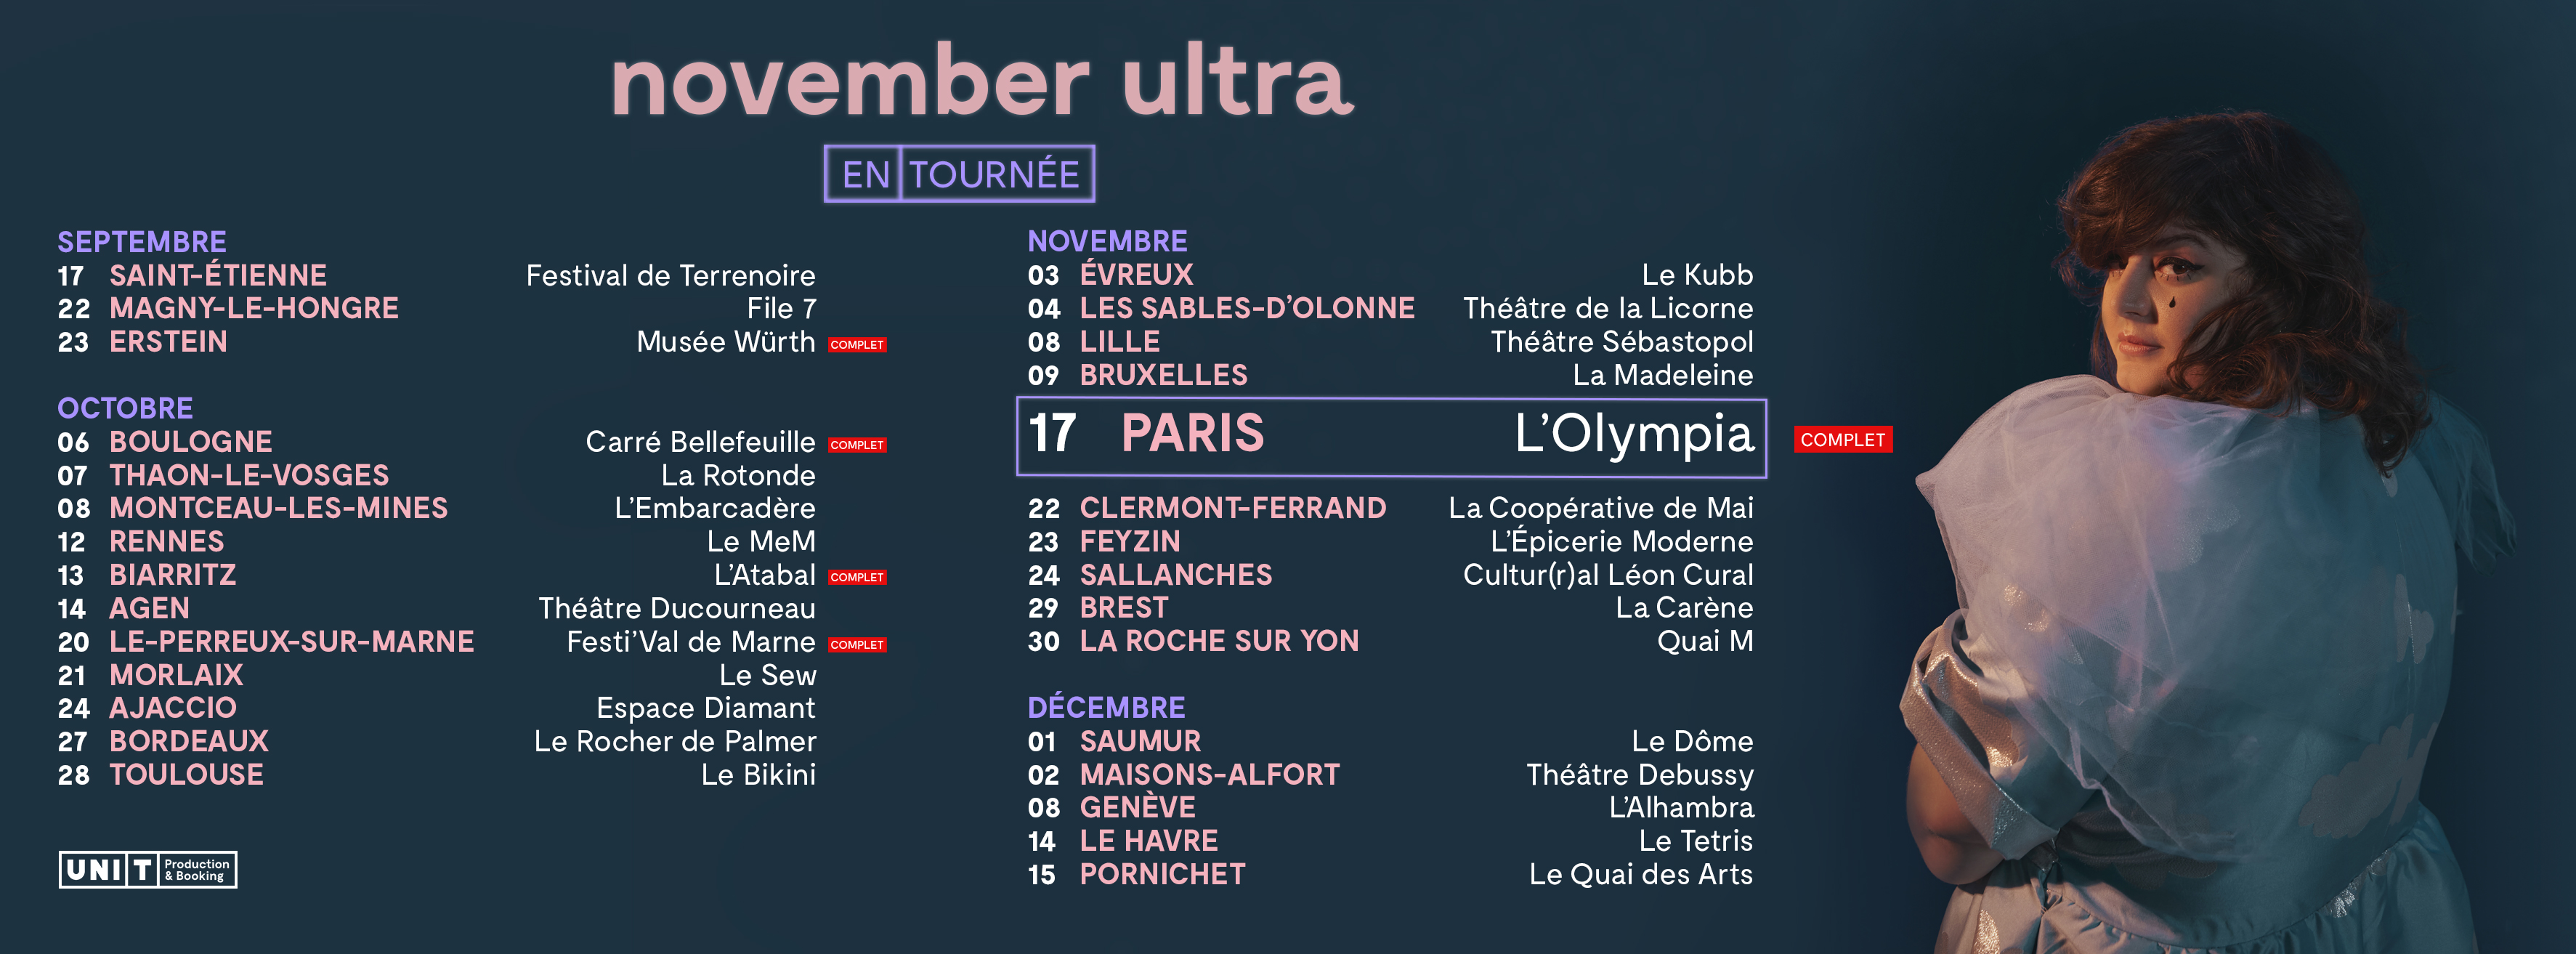 November Ultra en tournée 